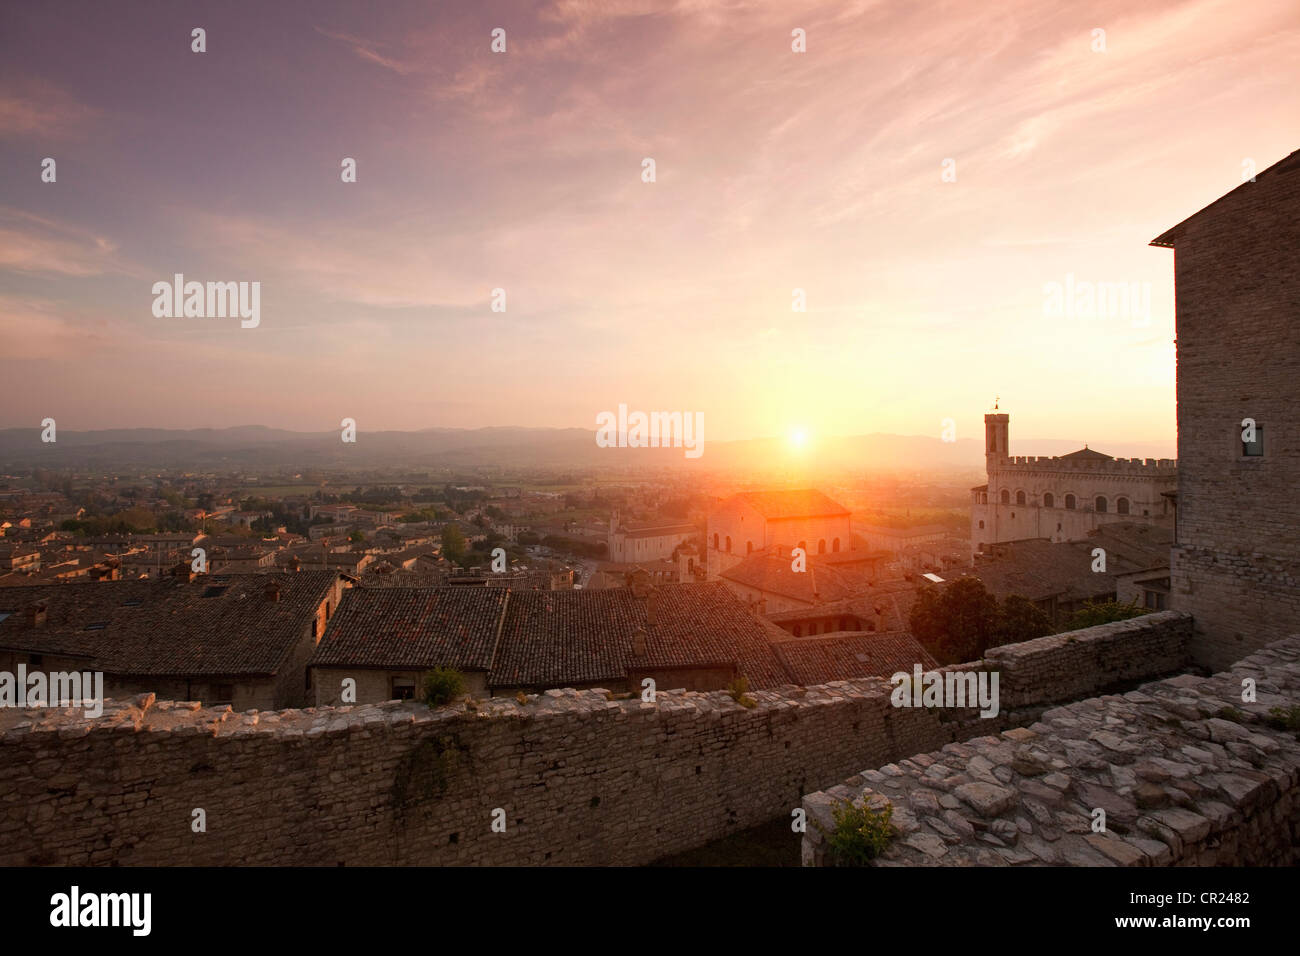 Sun shining over stone city walls Stock Photo